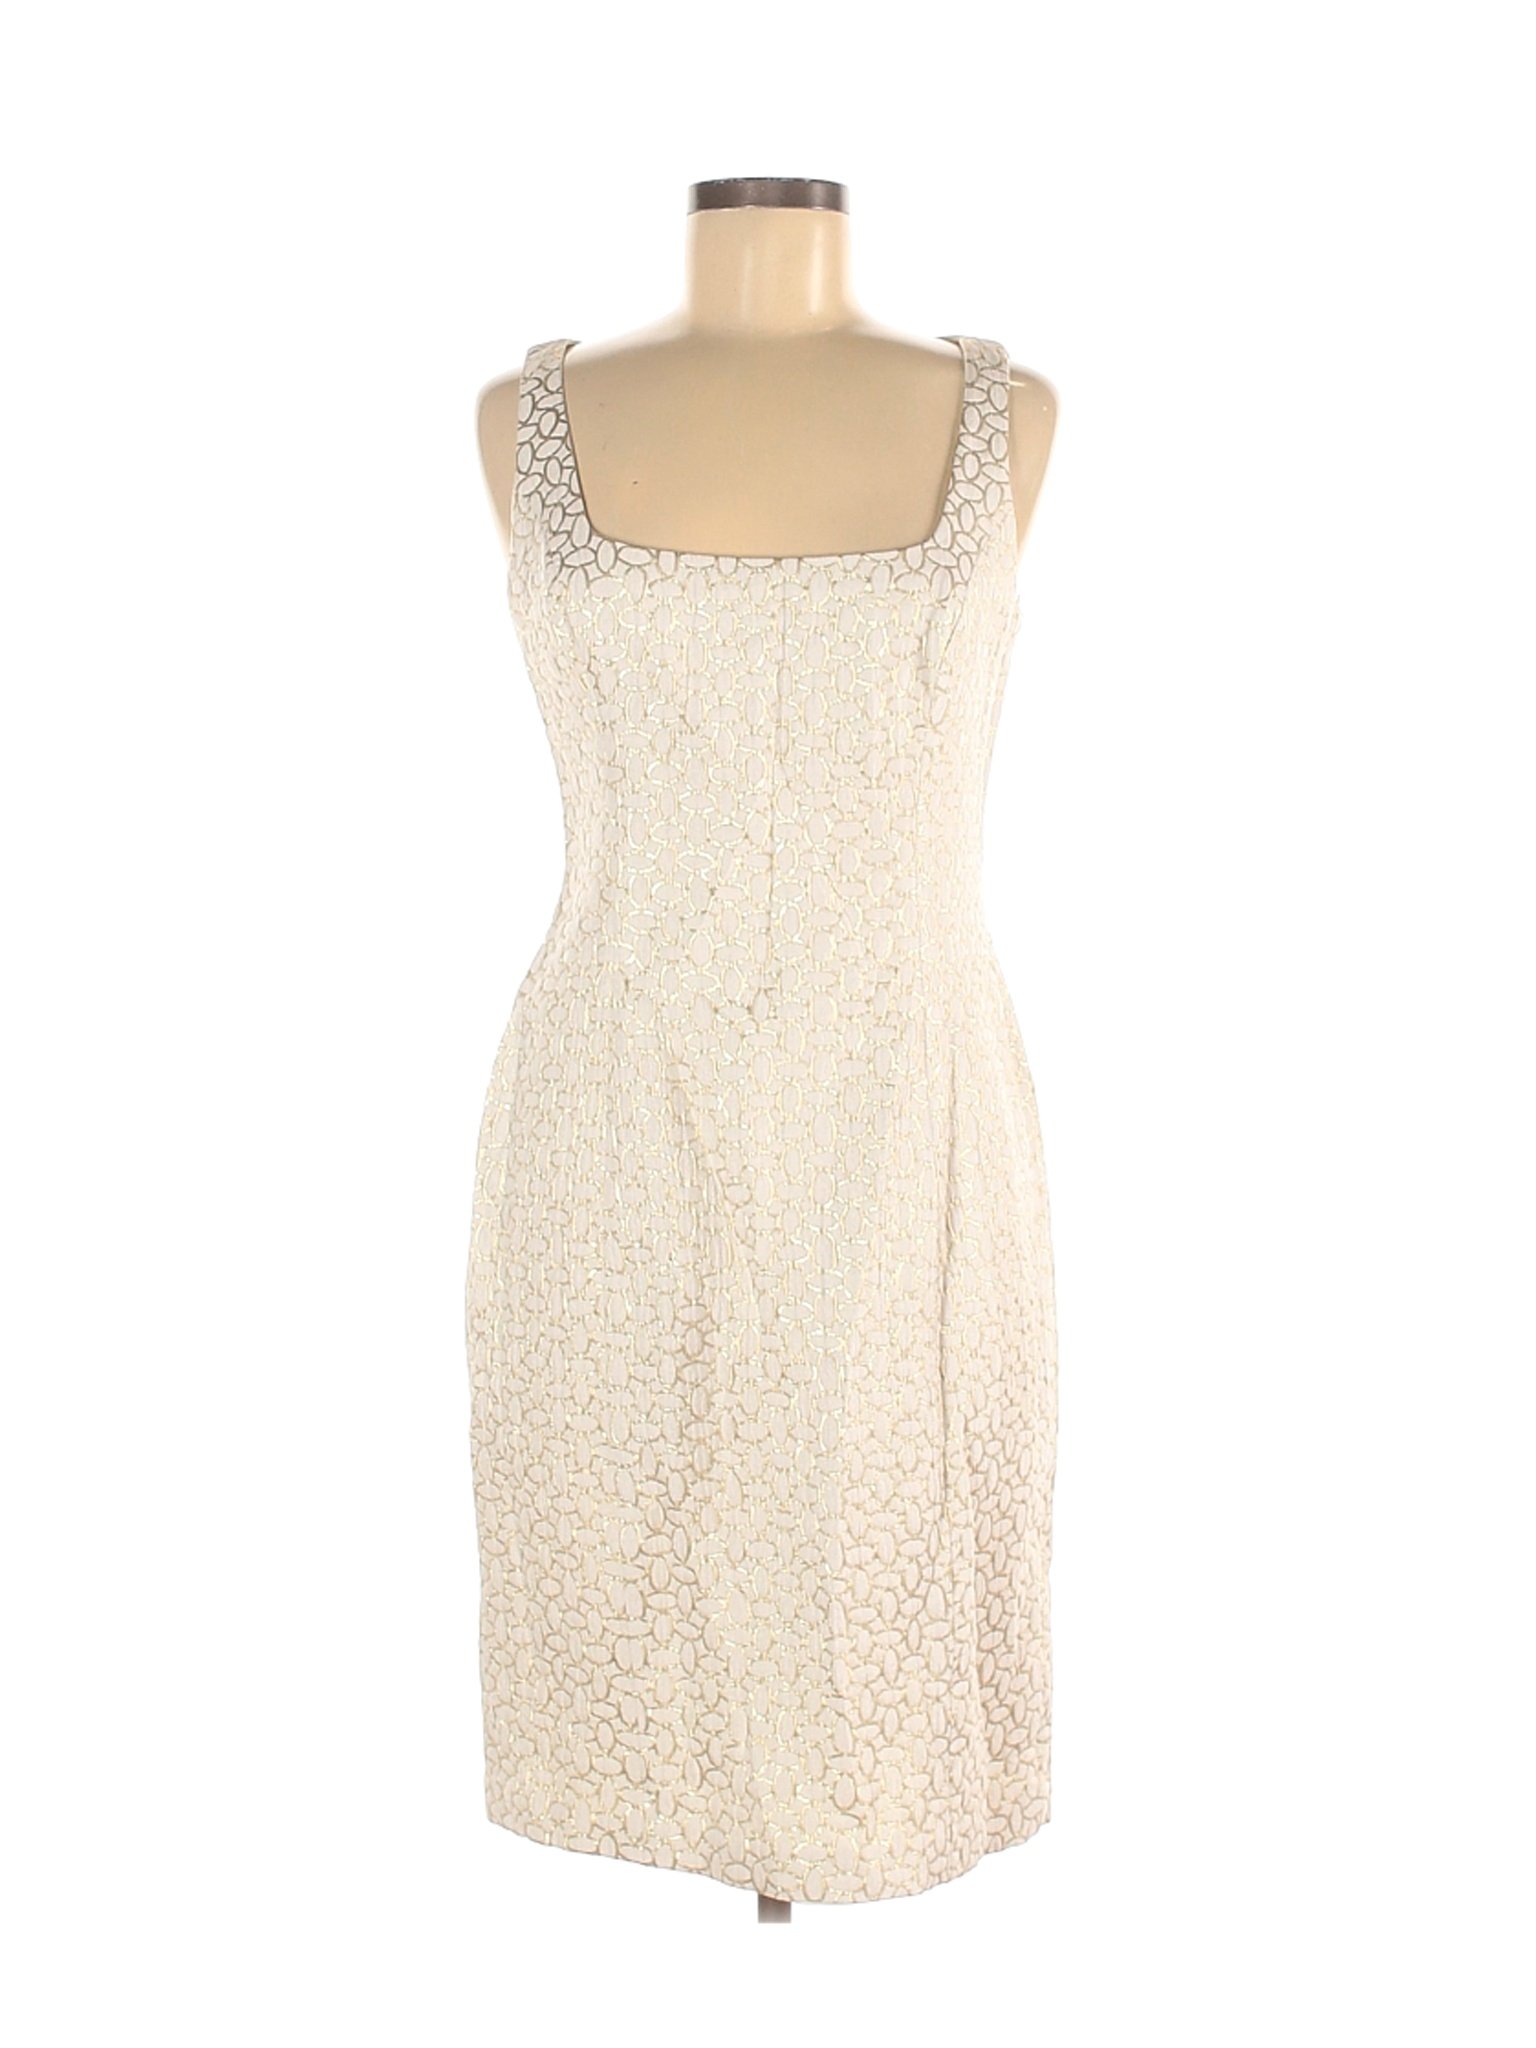 Lauren by Ralph Lauren Women Ivory Casual Dress 6 | eBay